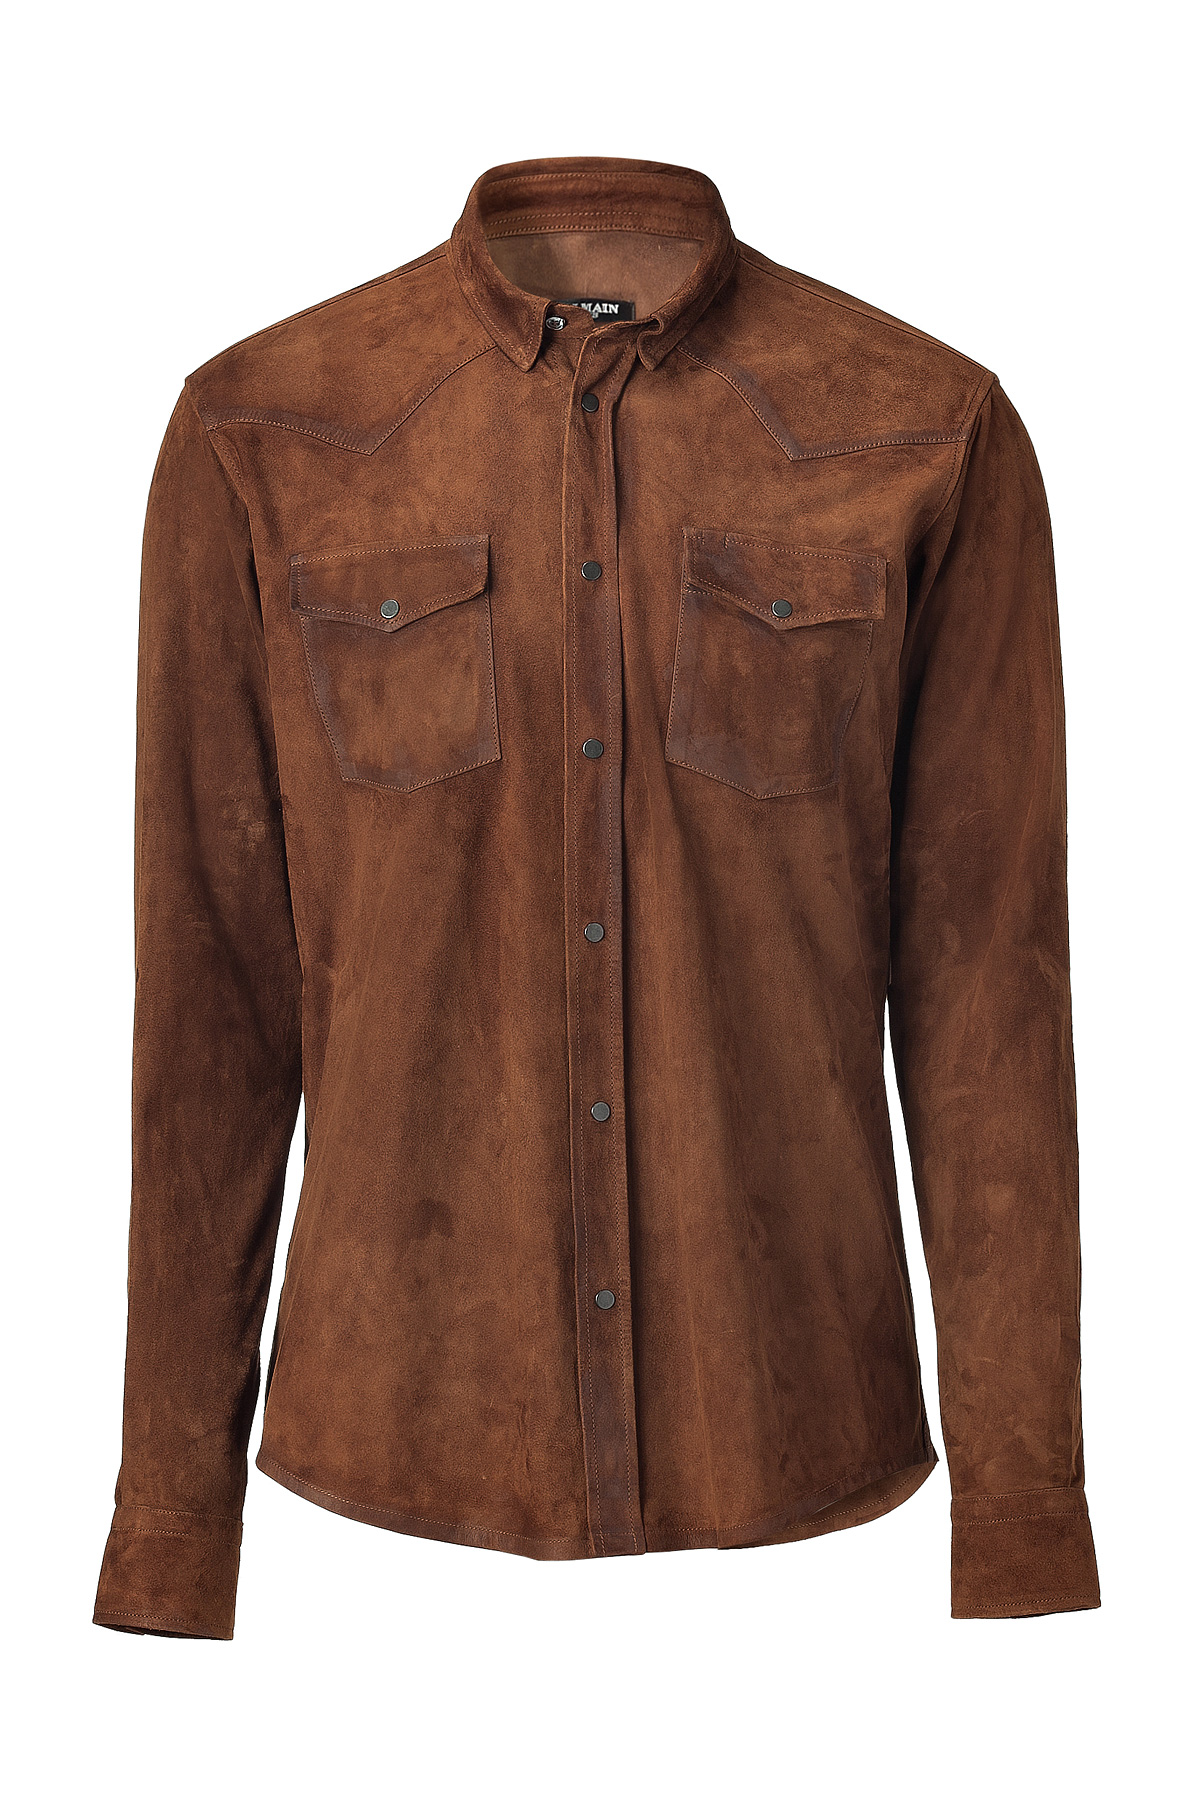 Lyst - Balmain Brown Suede Cowboy Shirt in Brown for Men